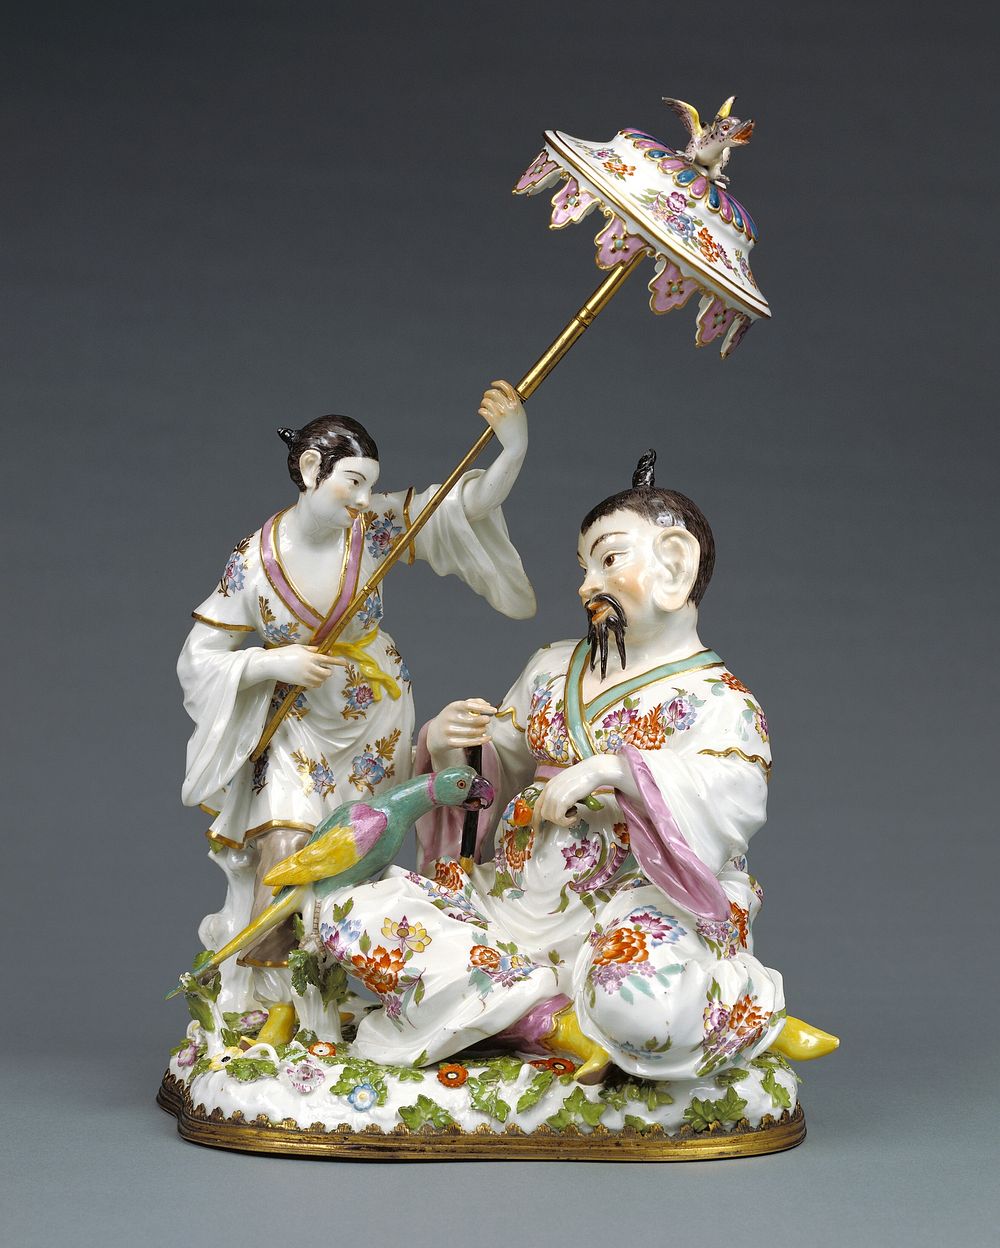 Group of Japanese Figures by Johann Joachim Kändler and Meissen Porcelain Manufactory